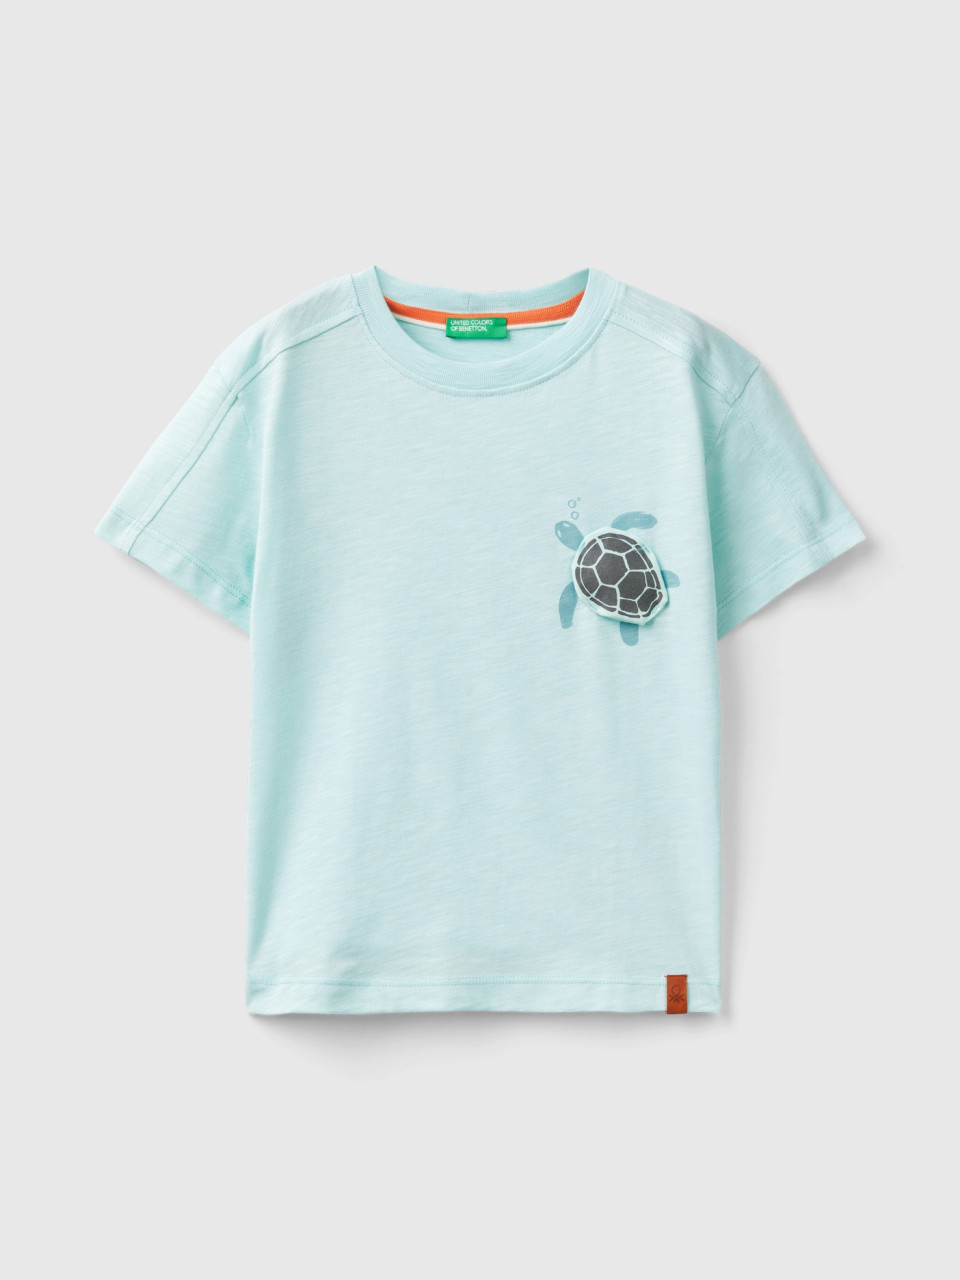 Benetton, T-shirt With Print And Applique, Aqua, Kids